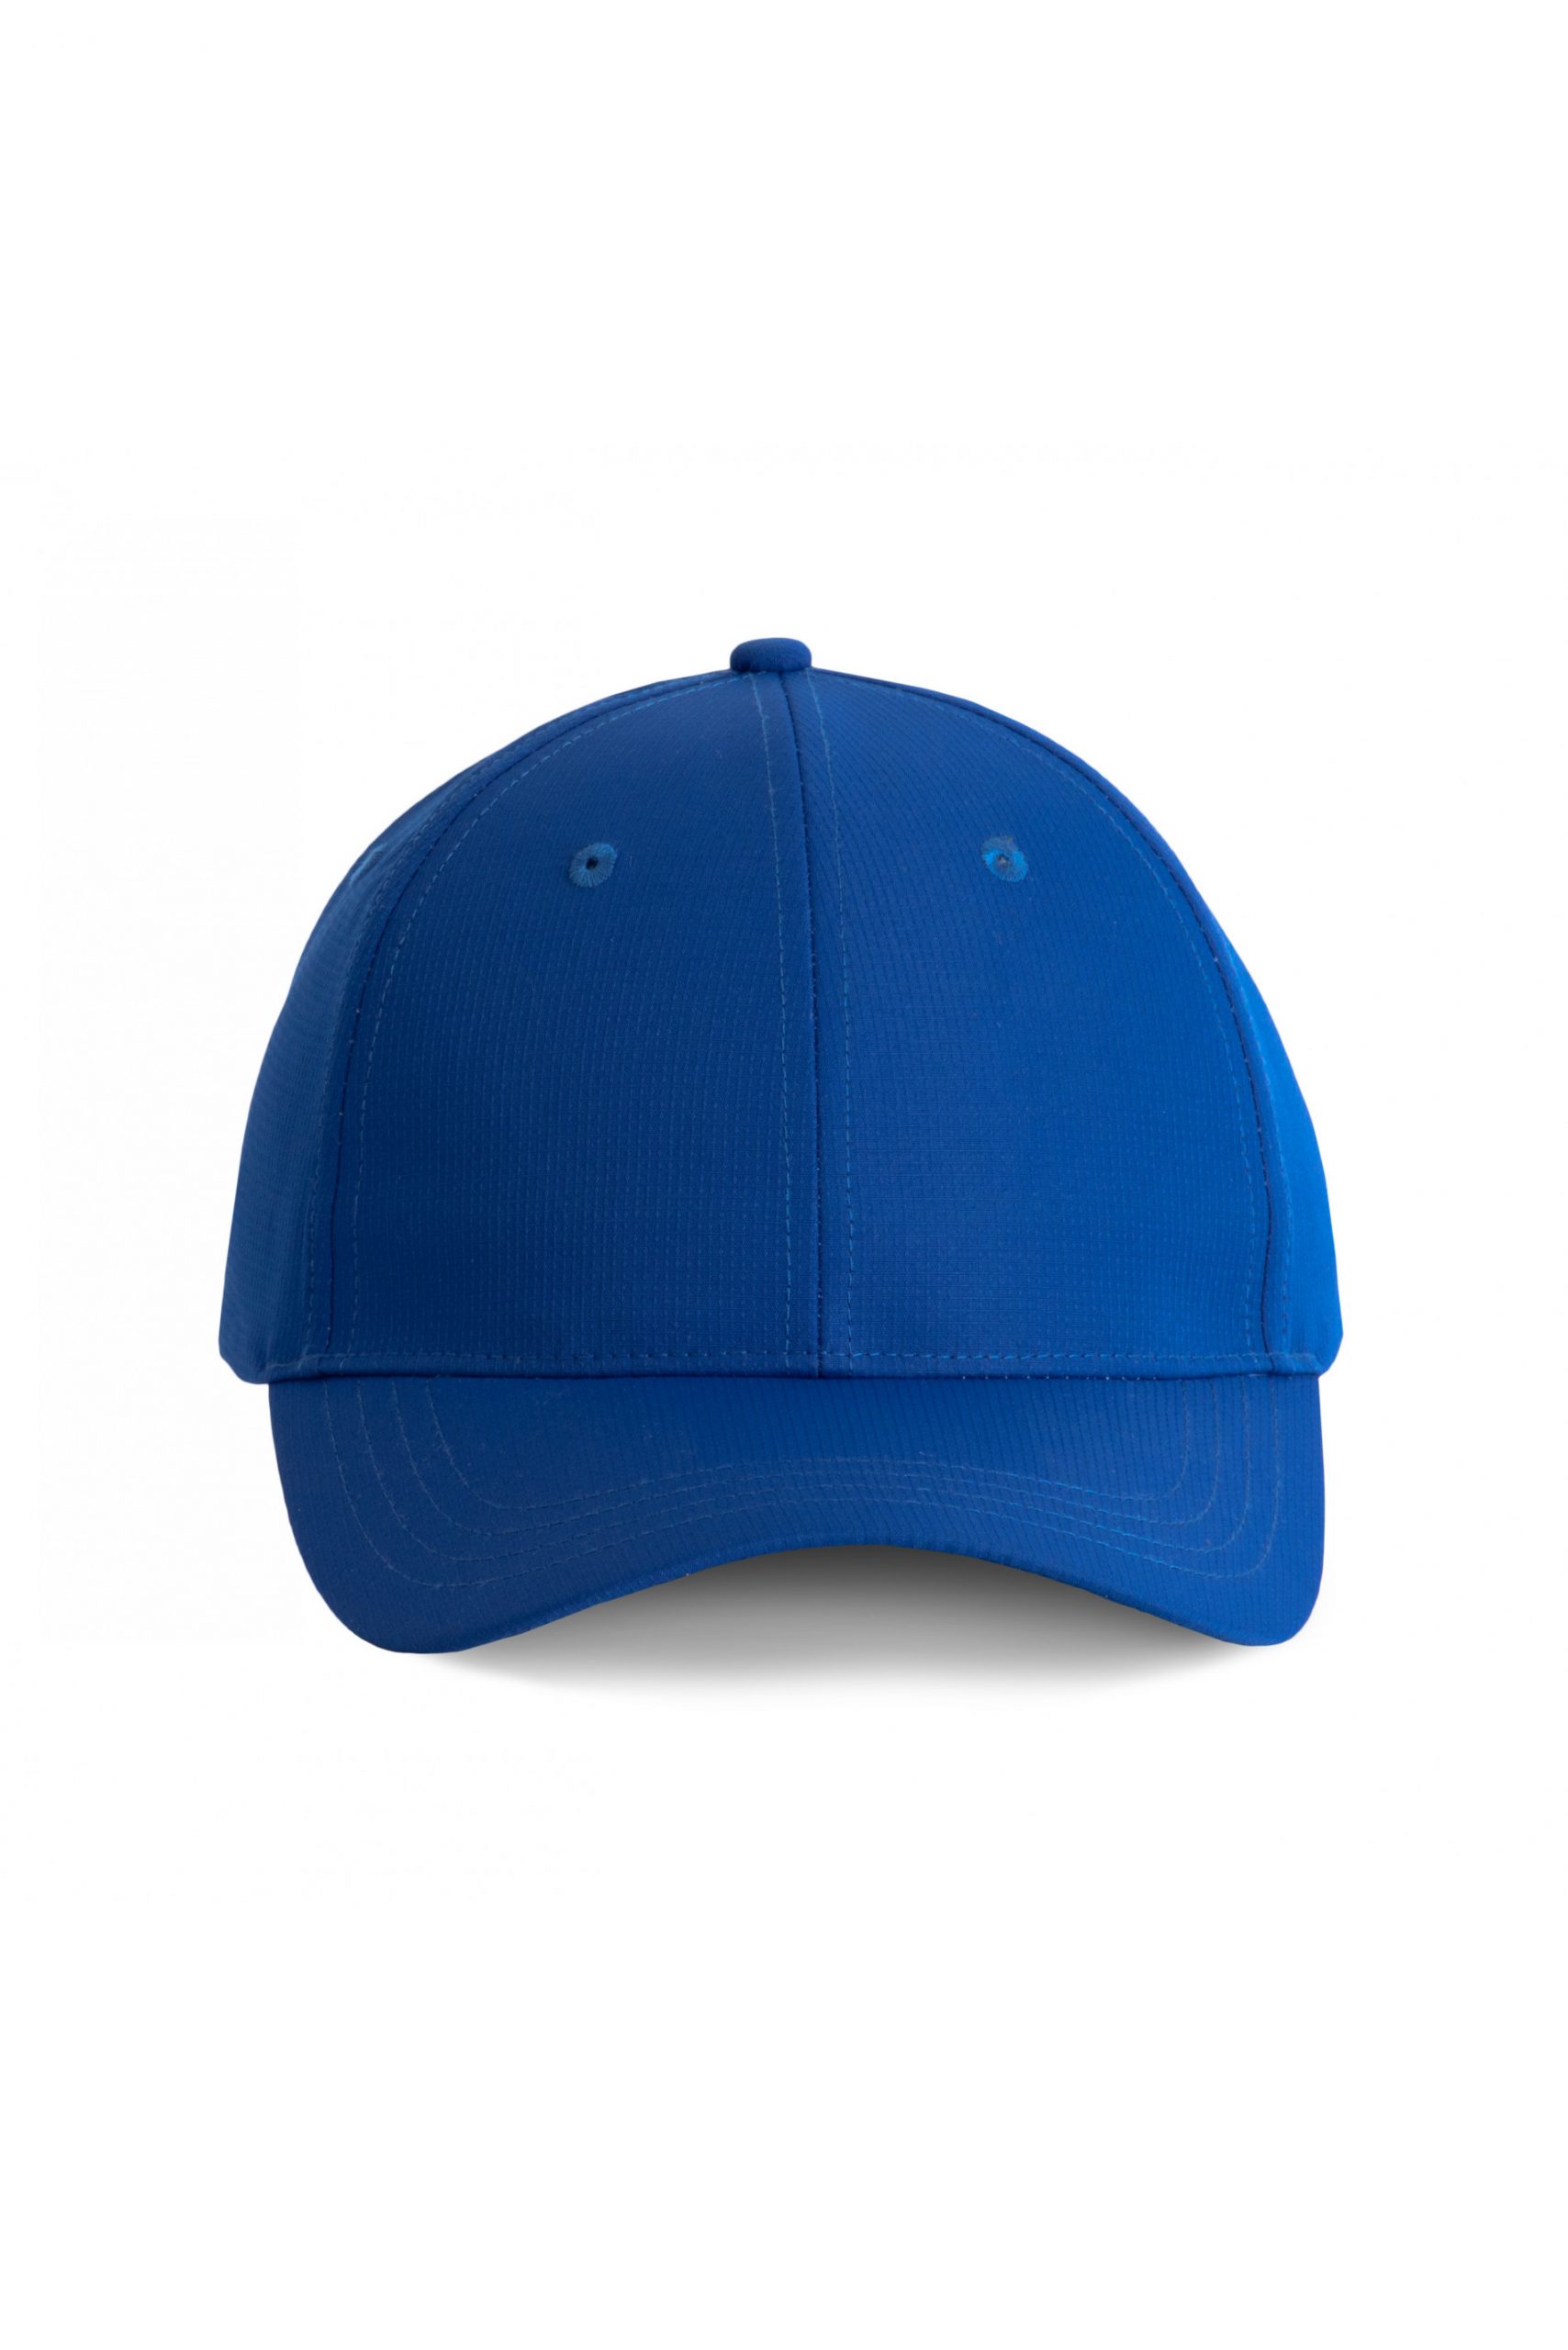 Royal blue cap